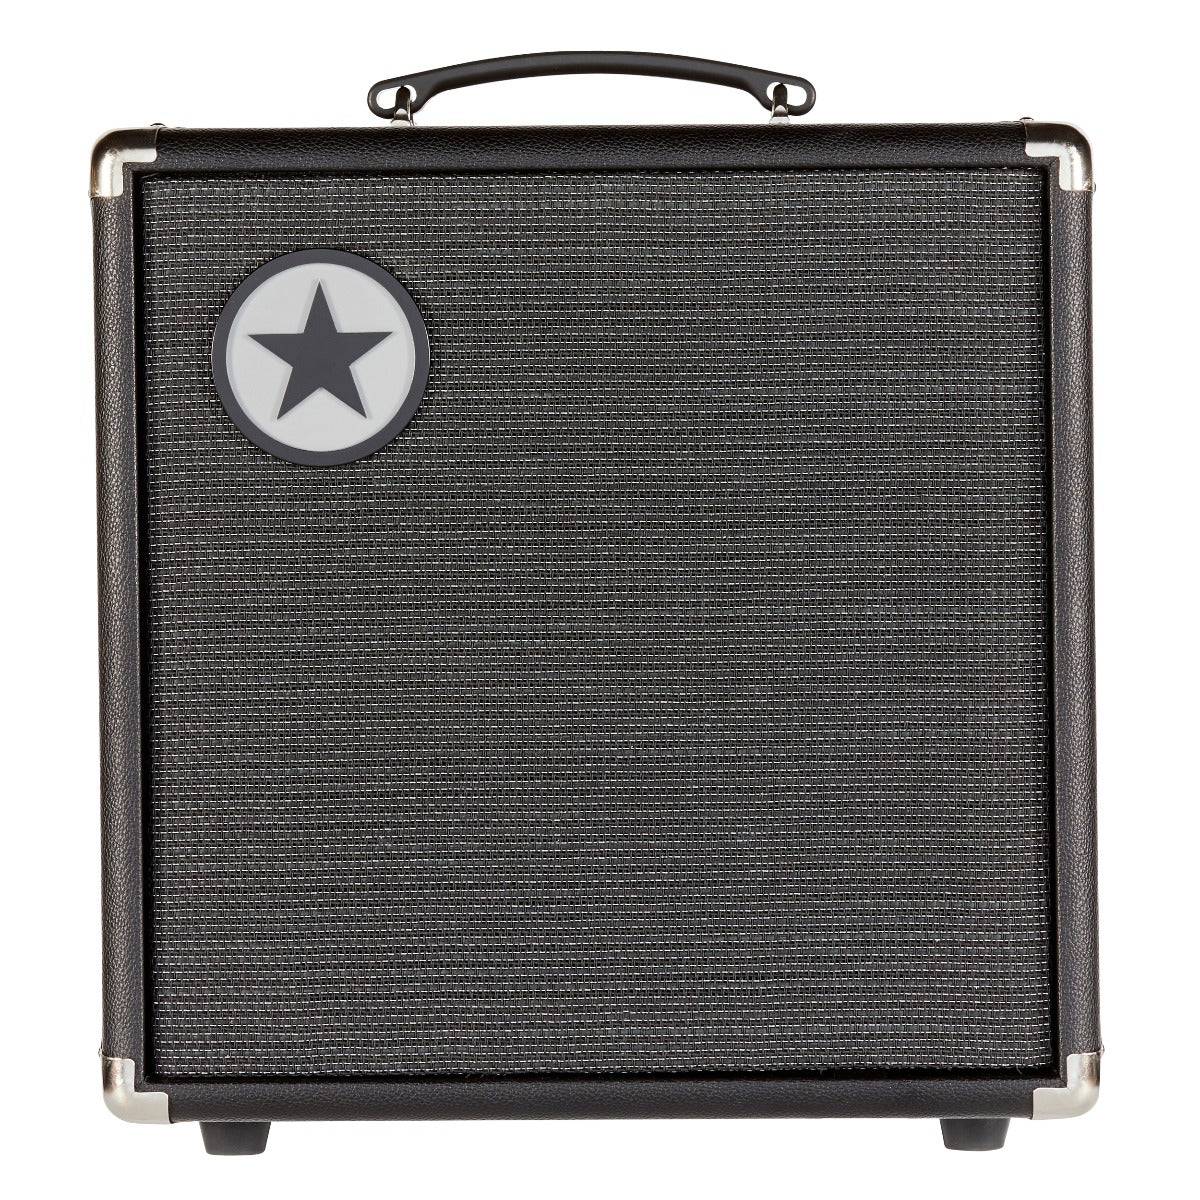 Blackstar U30 Unity Bass Amplifier